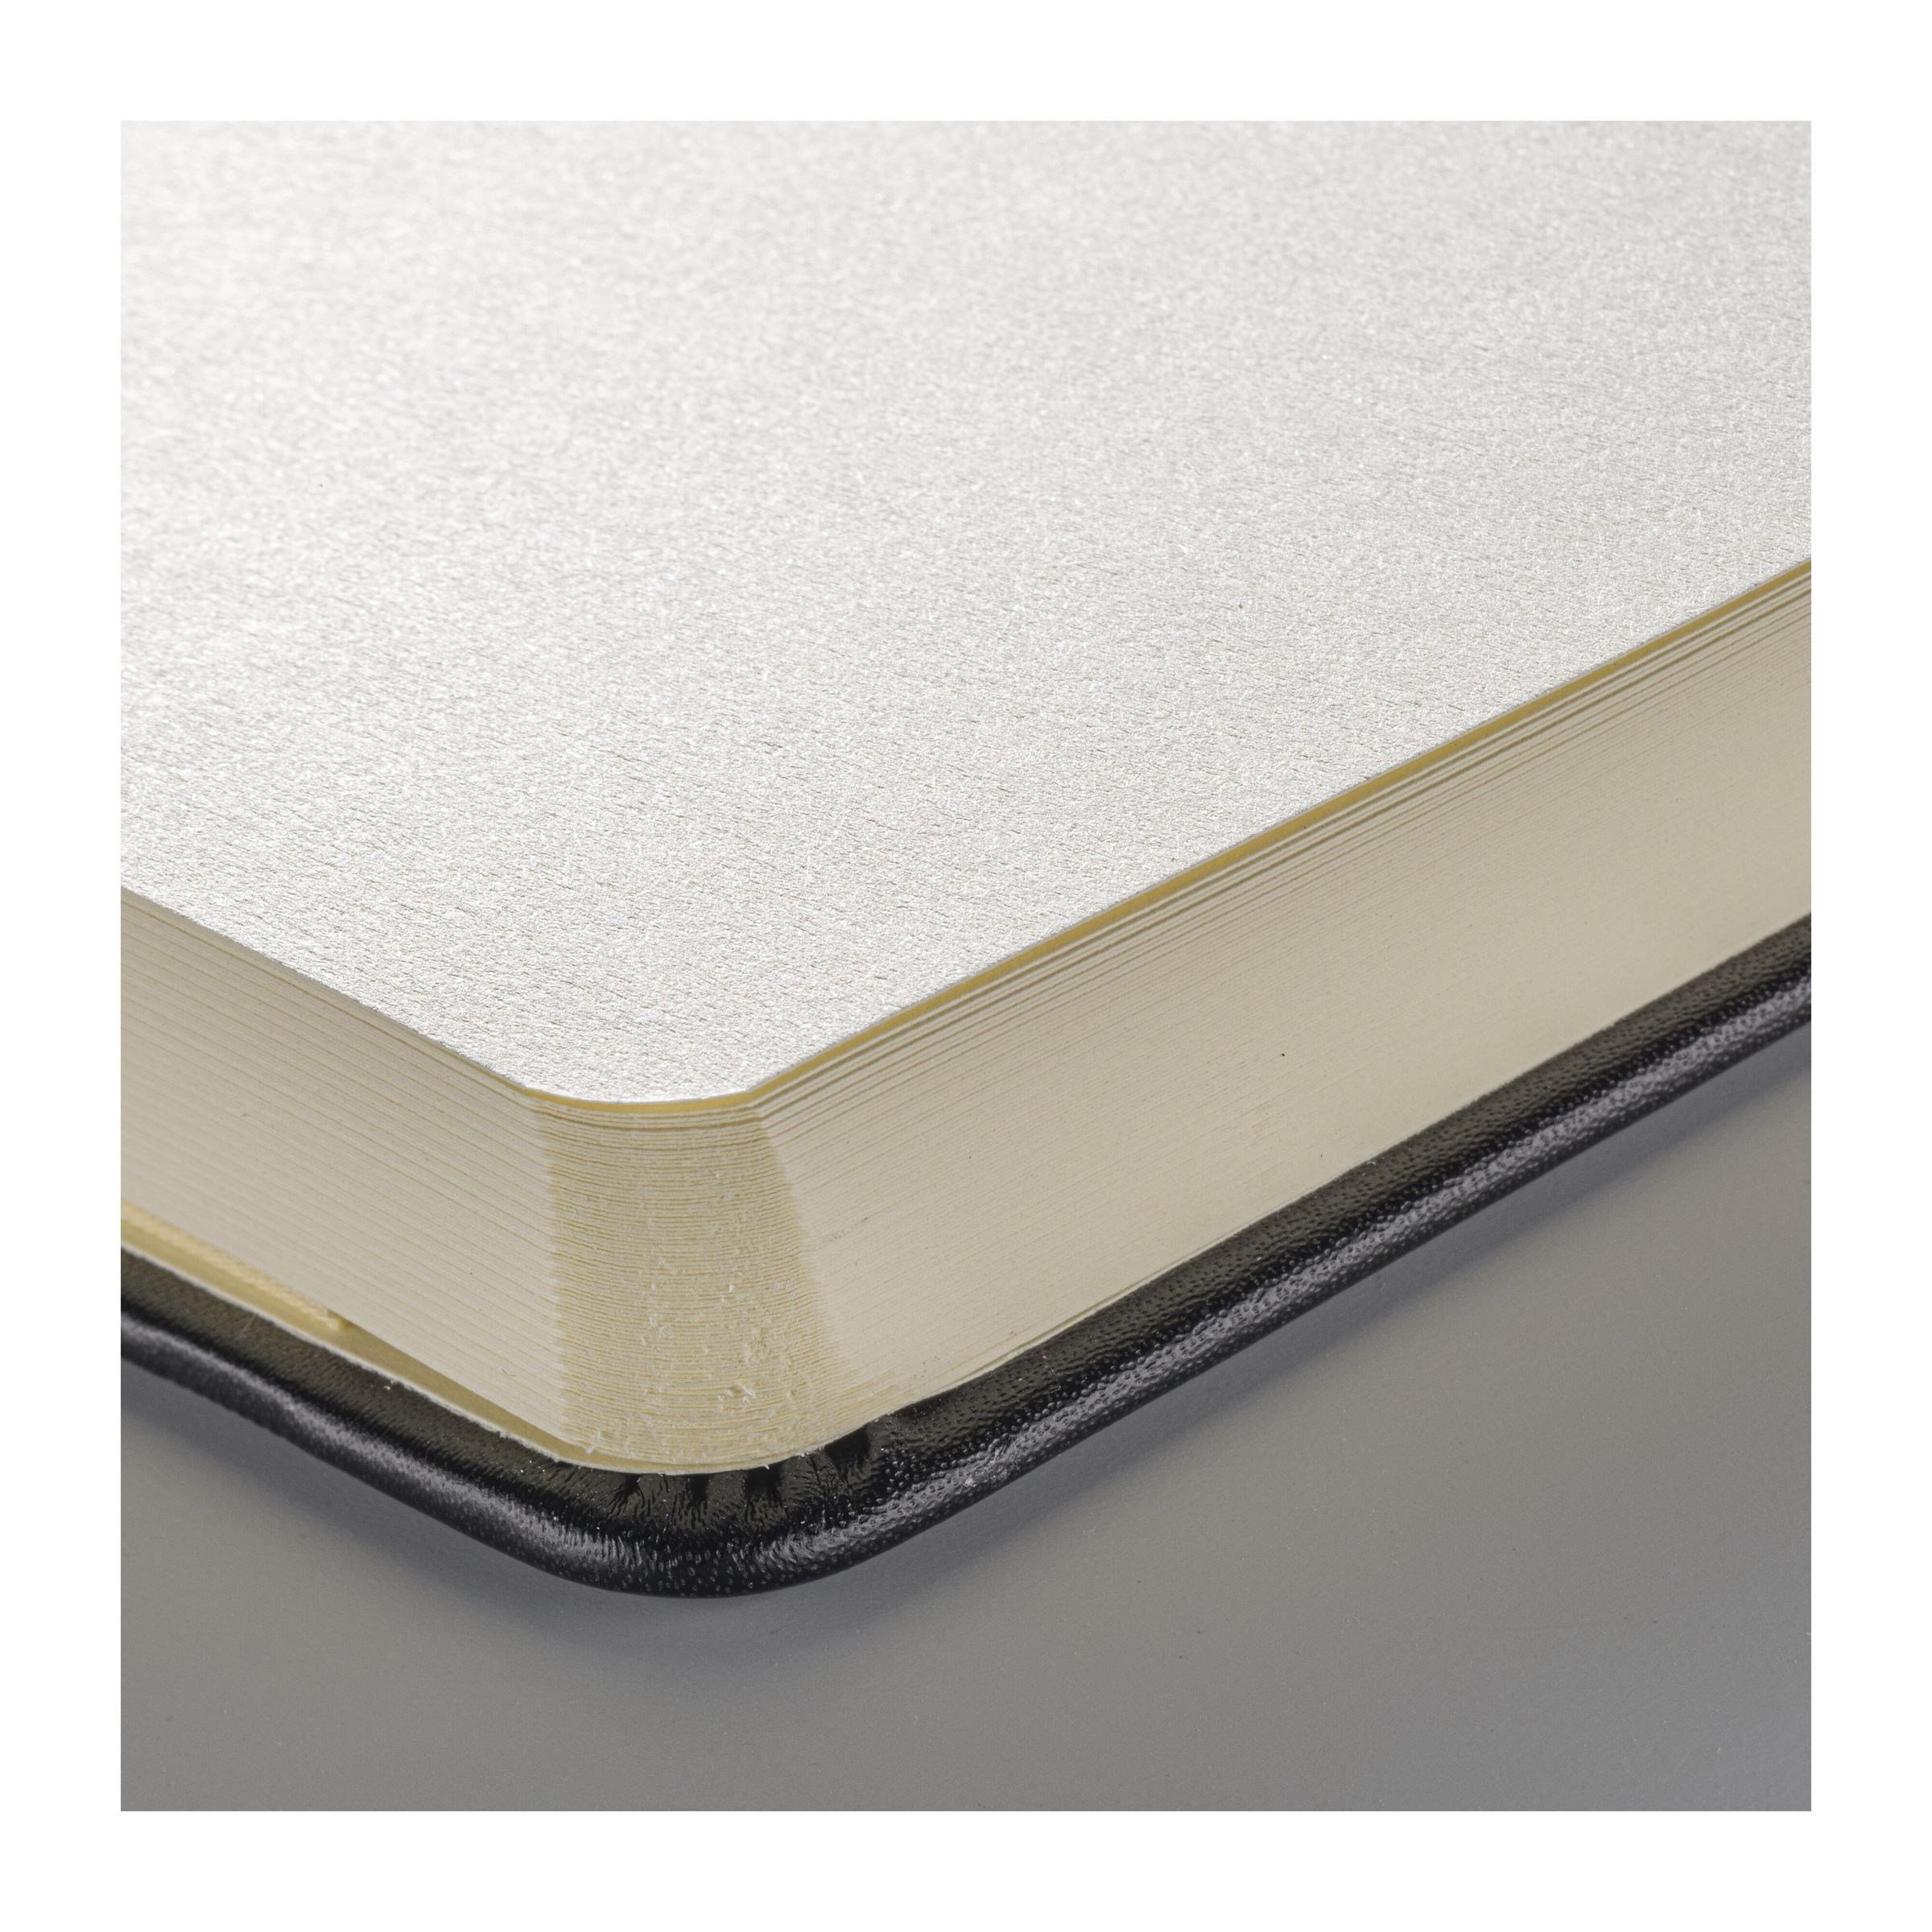 Caiet de schite A5 - Sakura - Vertical, 80 Sheets - Creme White Paper | Royal Talens